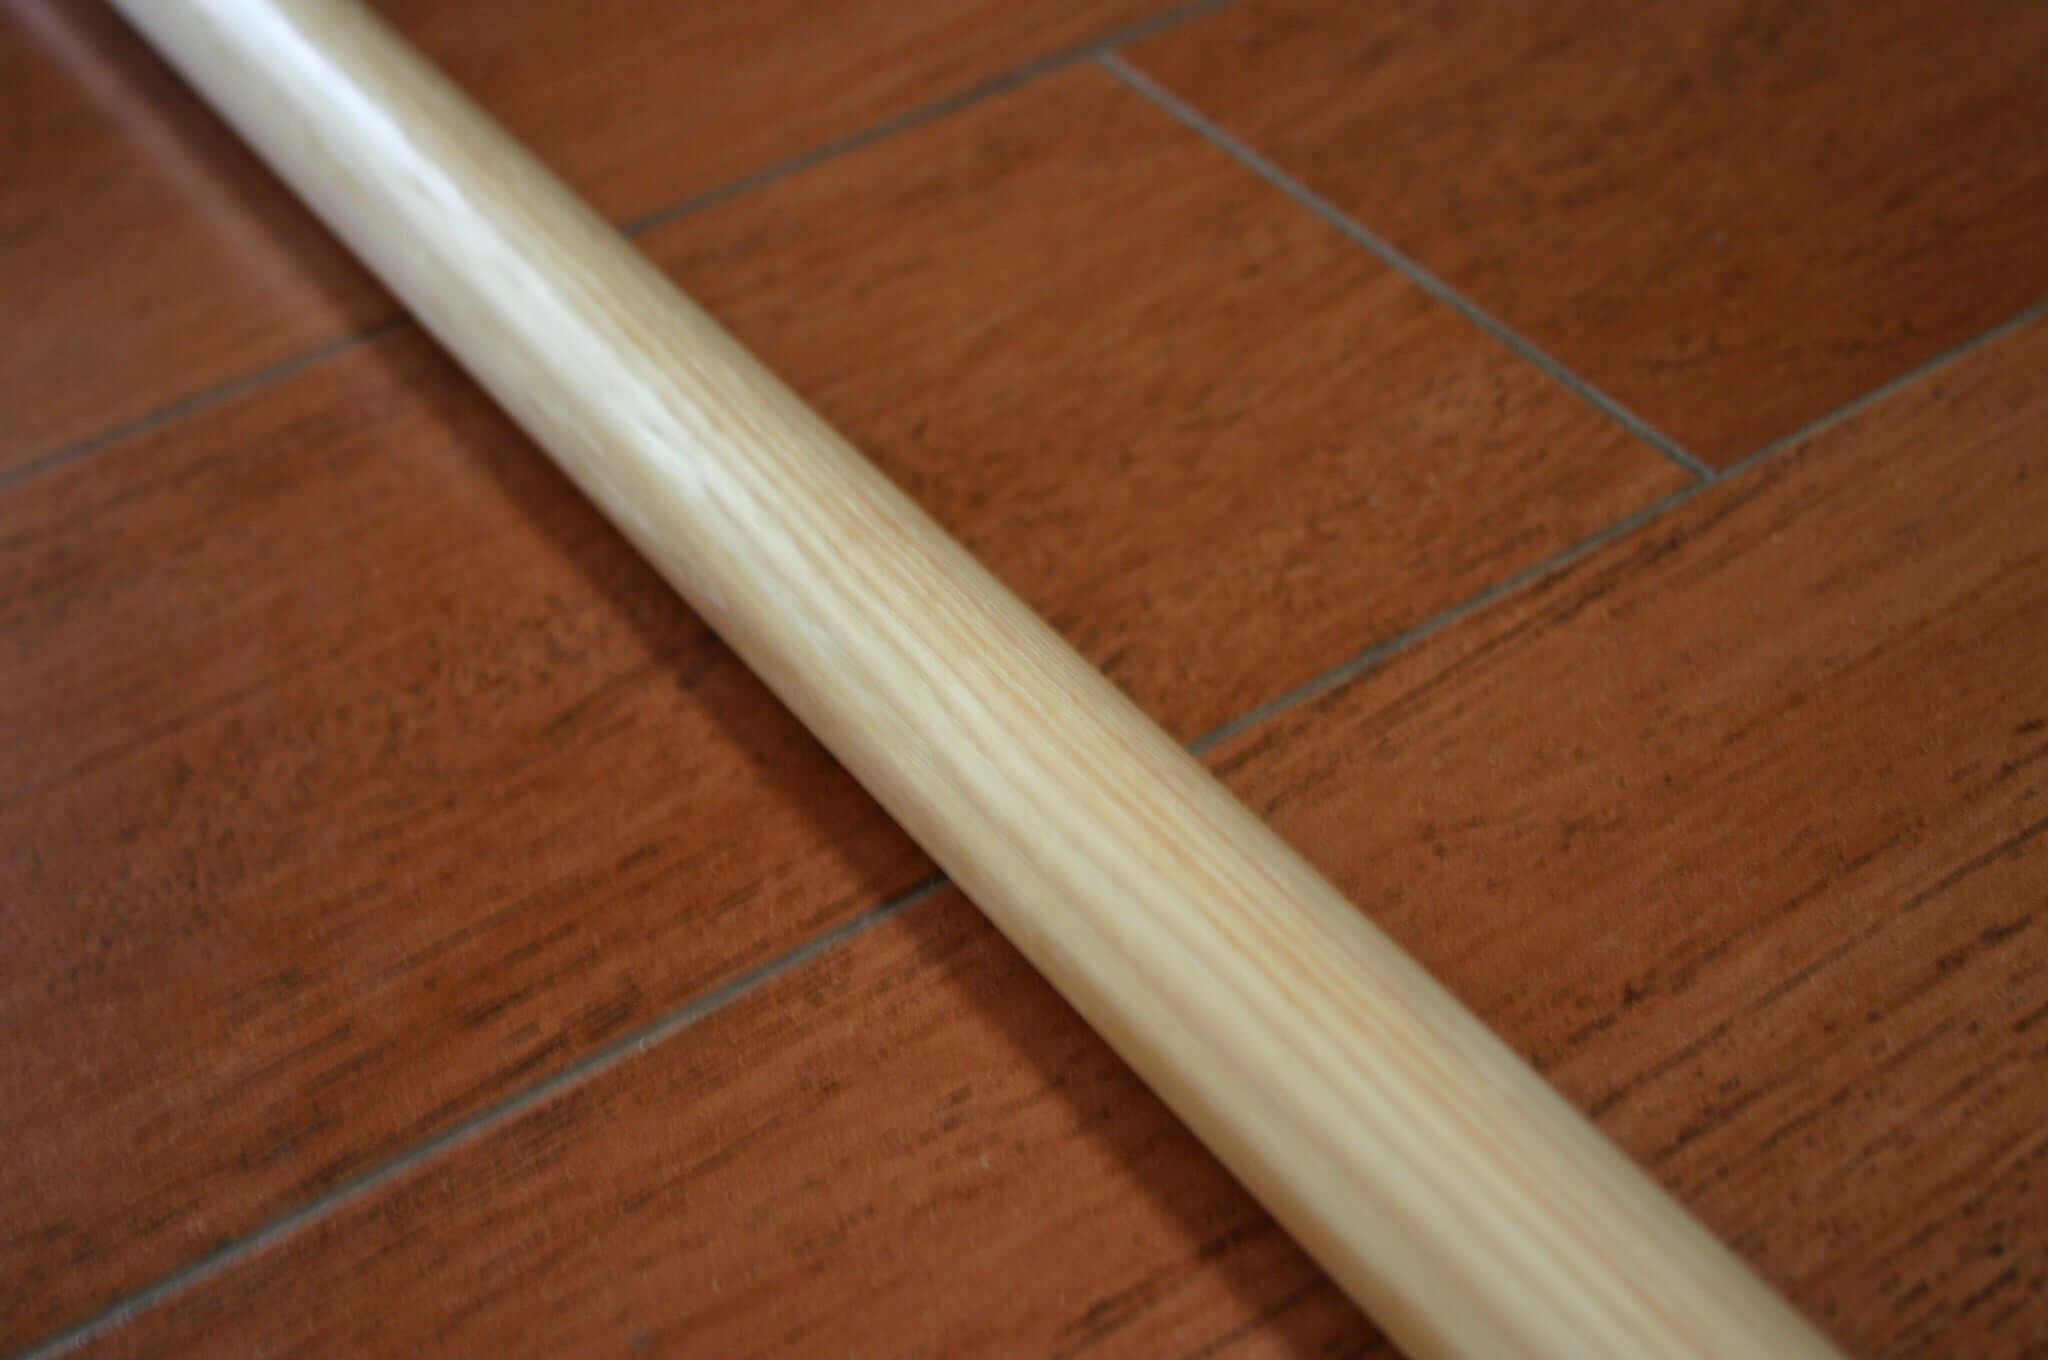 Karate Staff Hanbo sapwood hardwood handmade